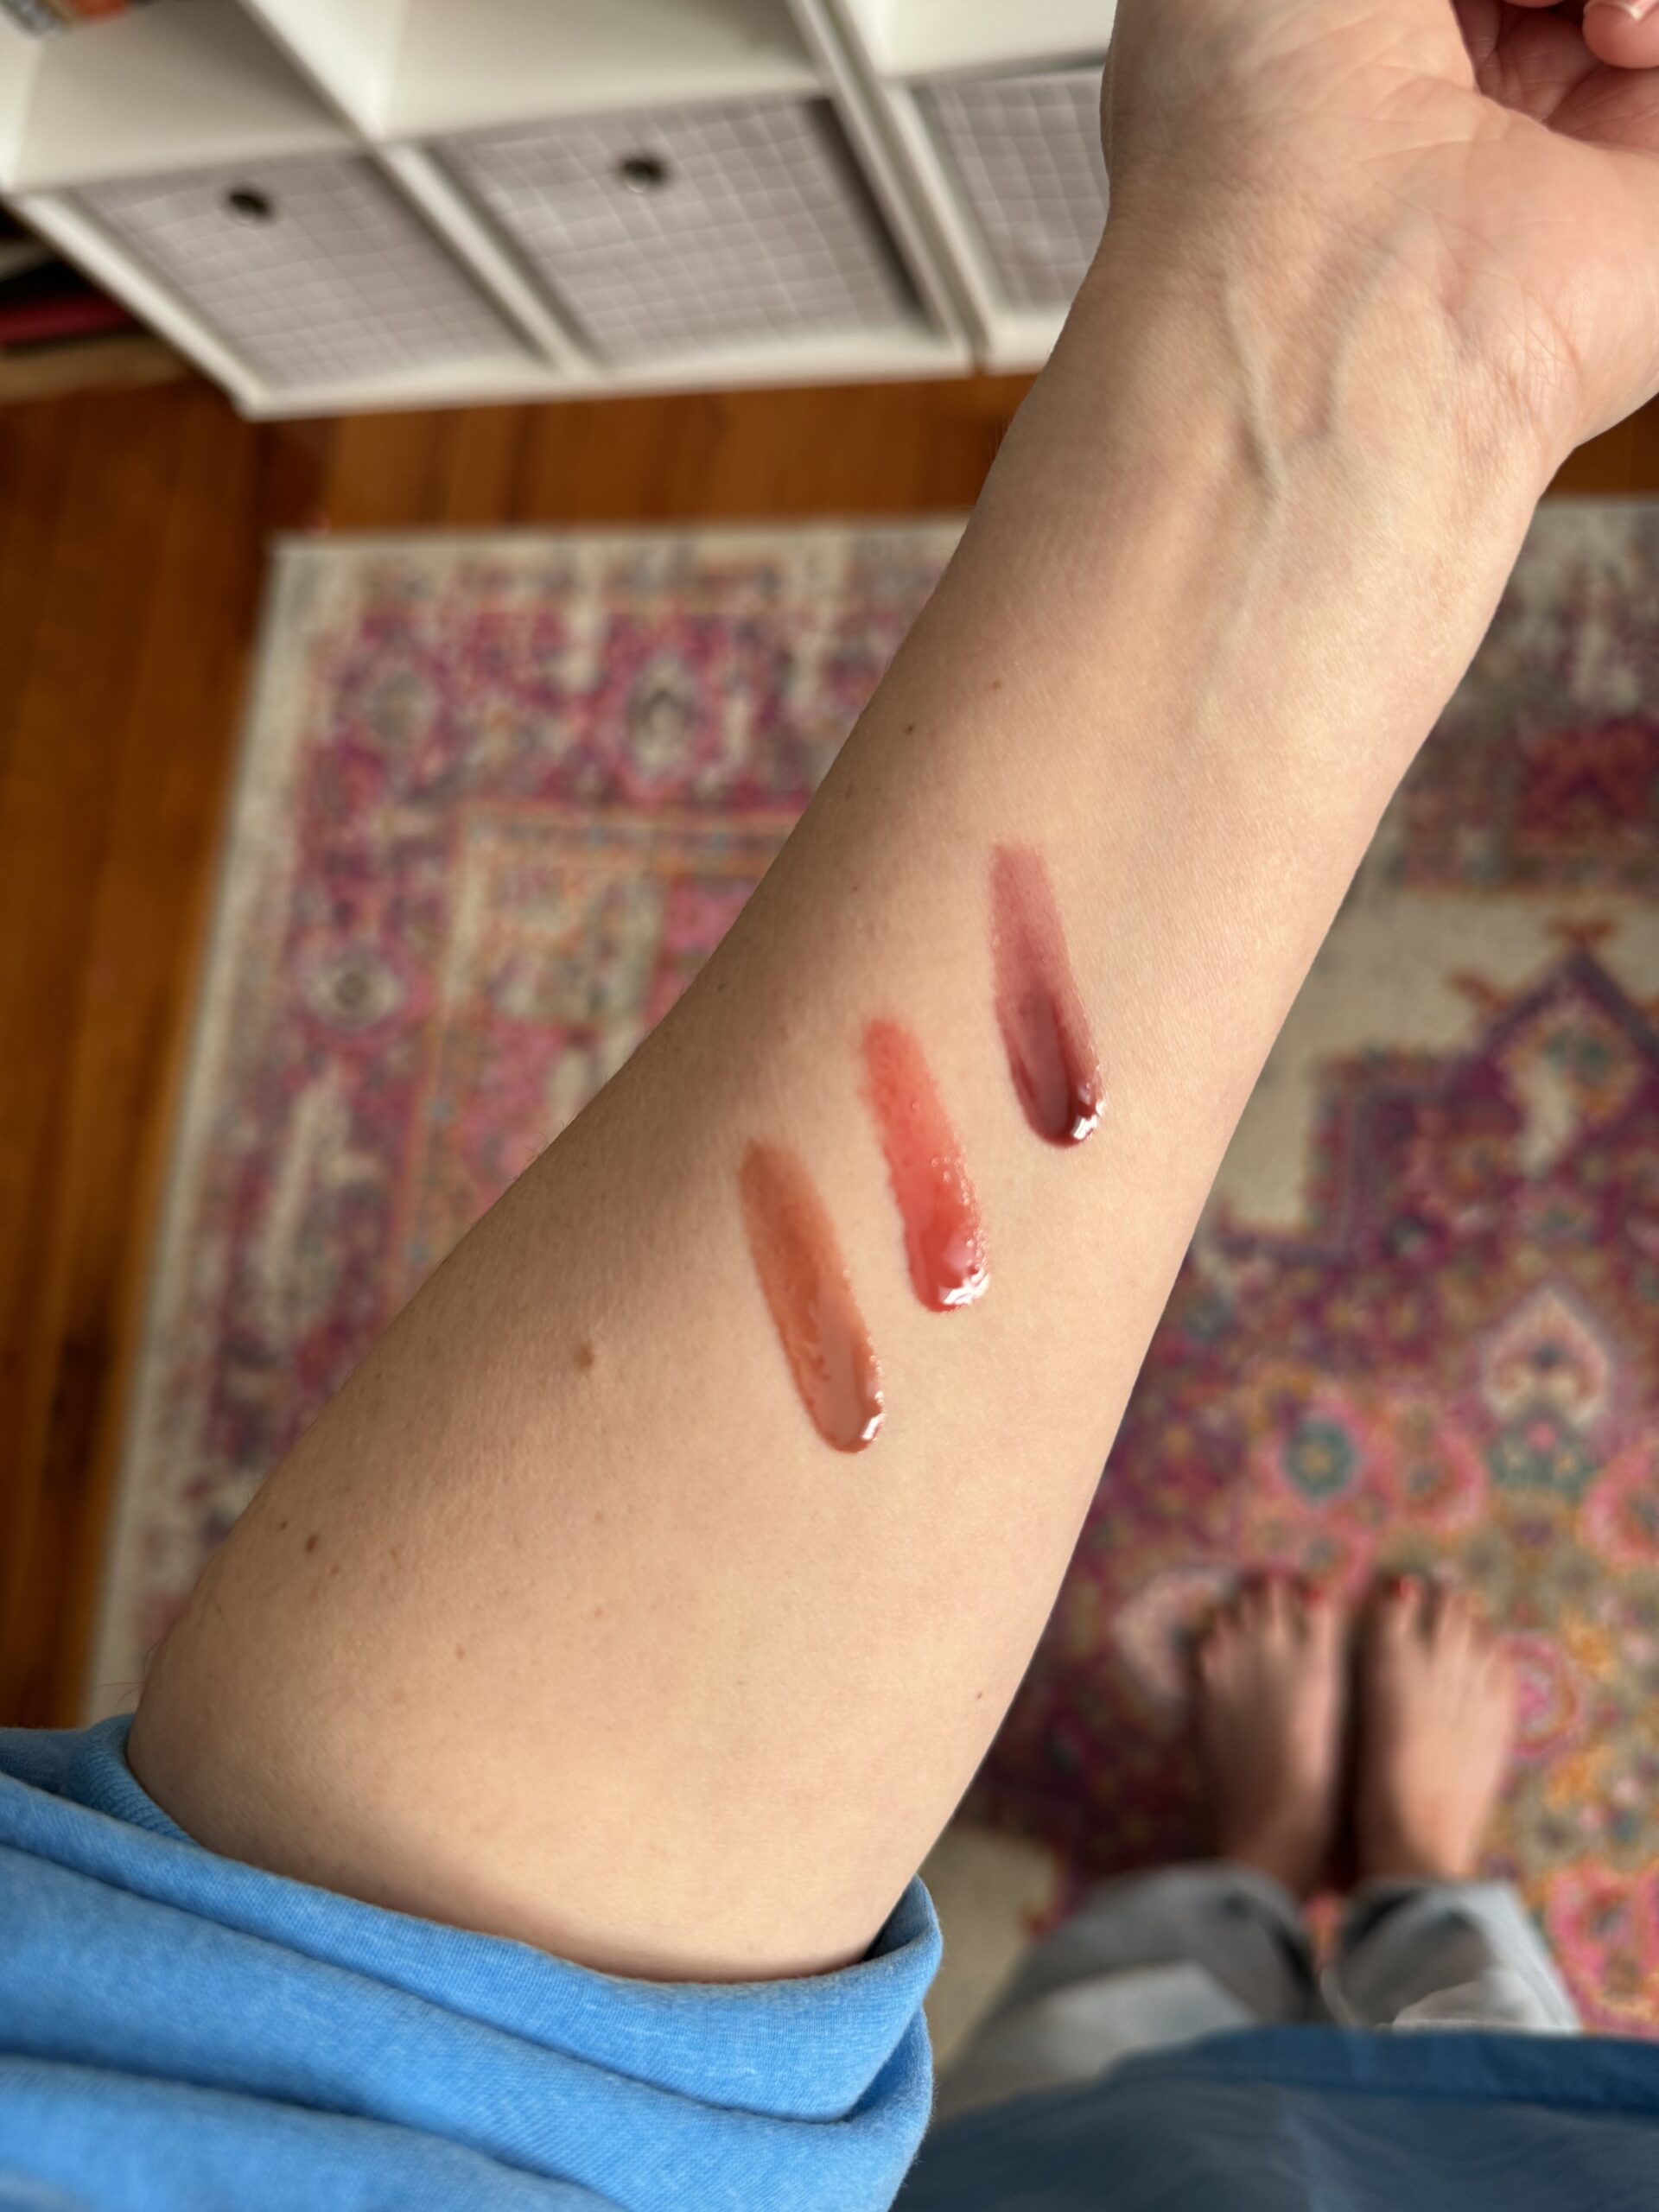 Three lipsticks on a person's arm.